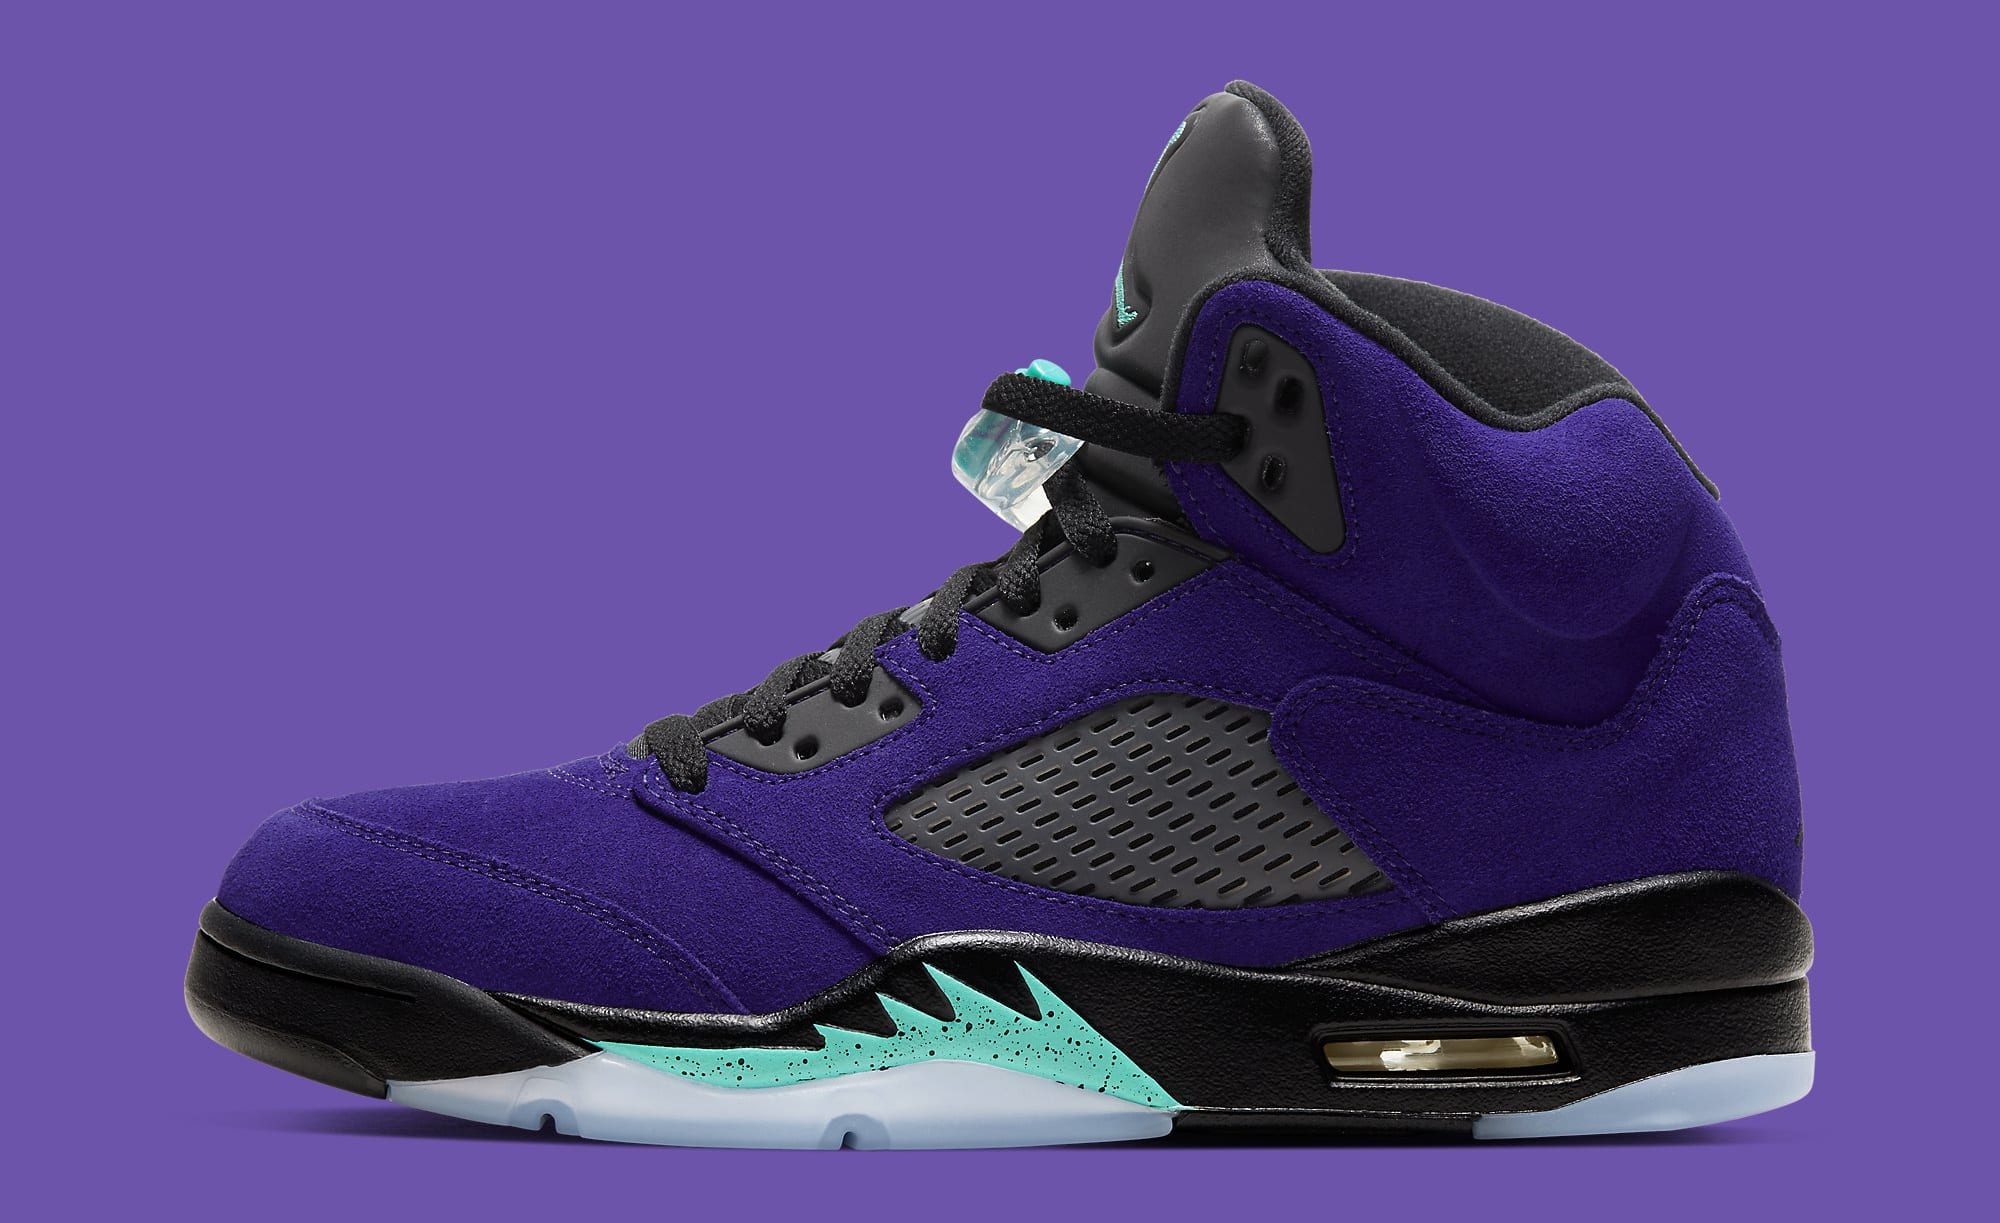 Sneakers Release – Jordan 5 Retro “Alternate Grape” Grape  Ice/New Emerald